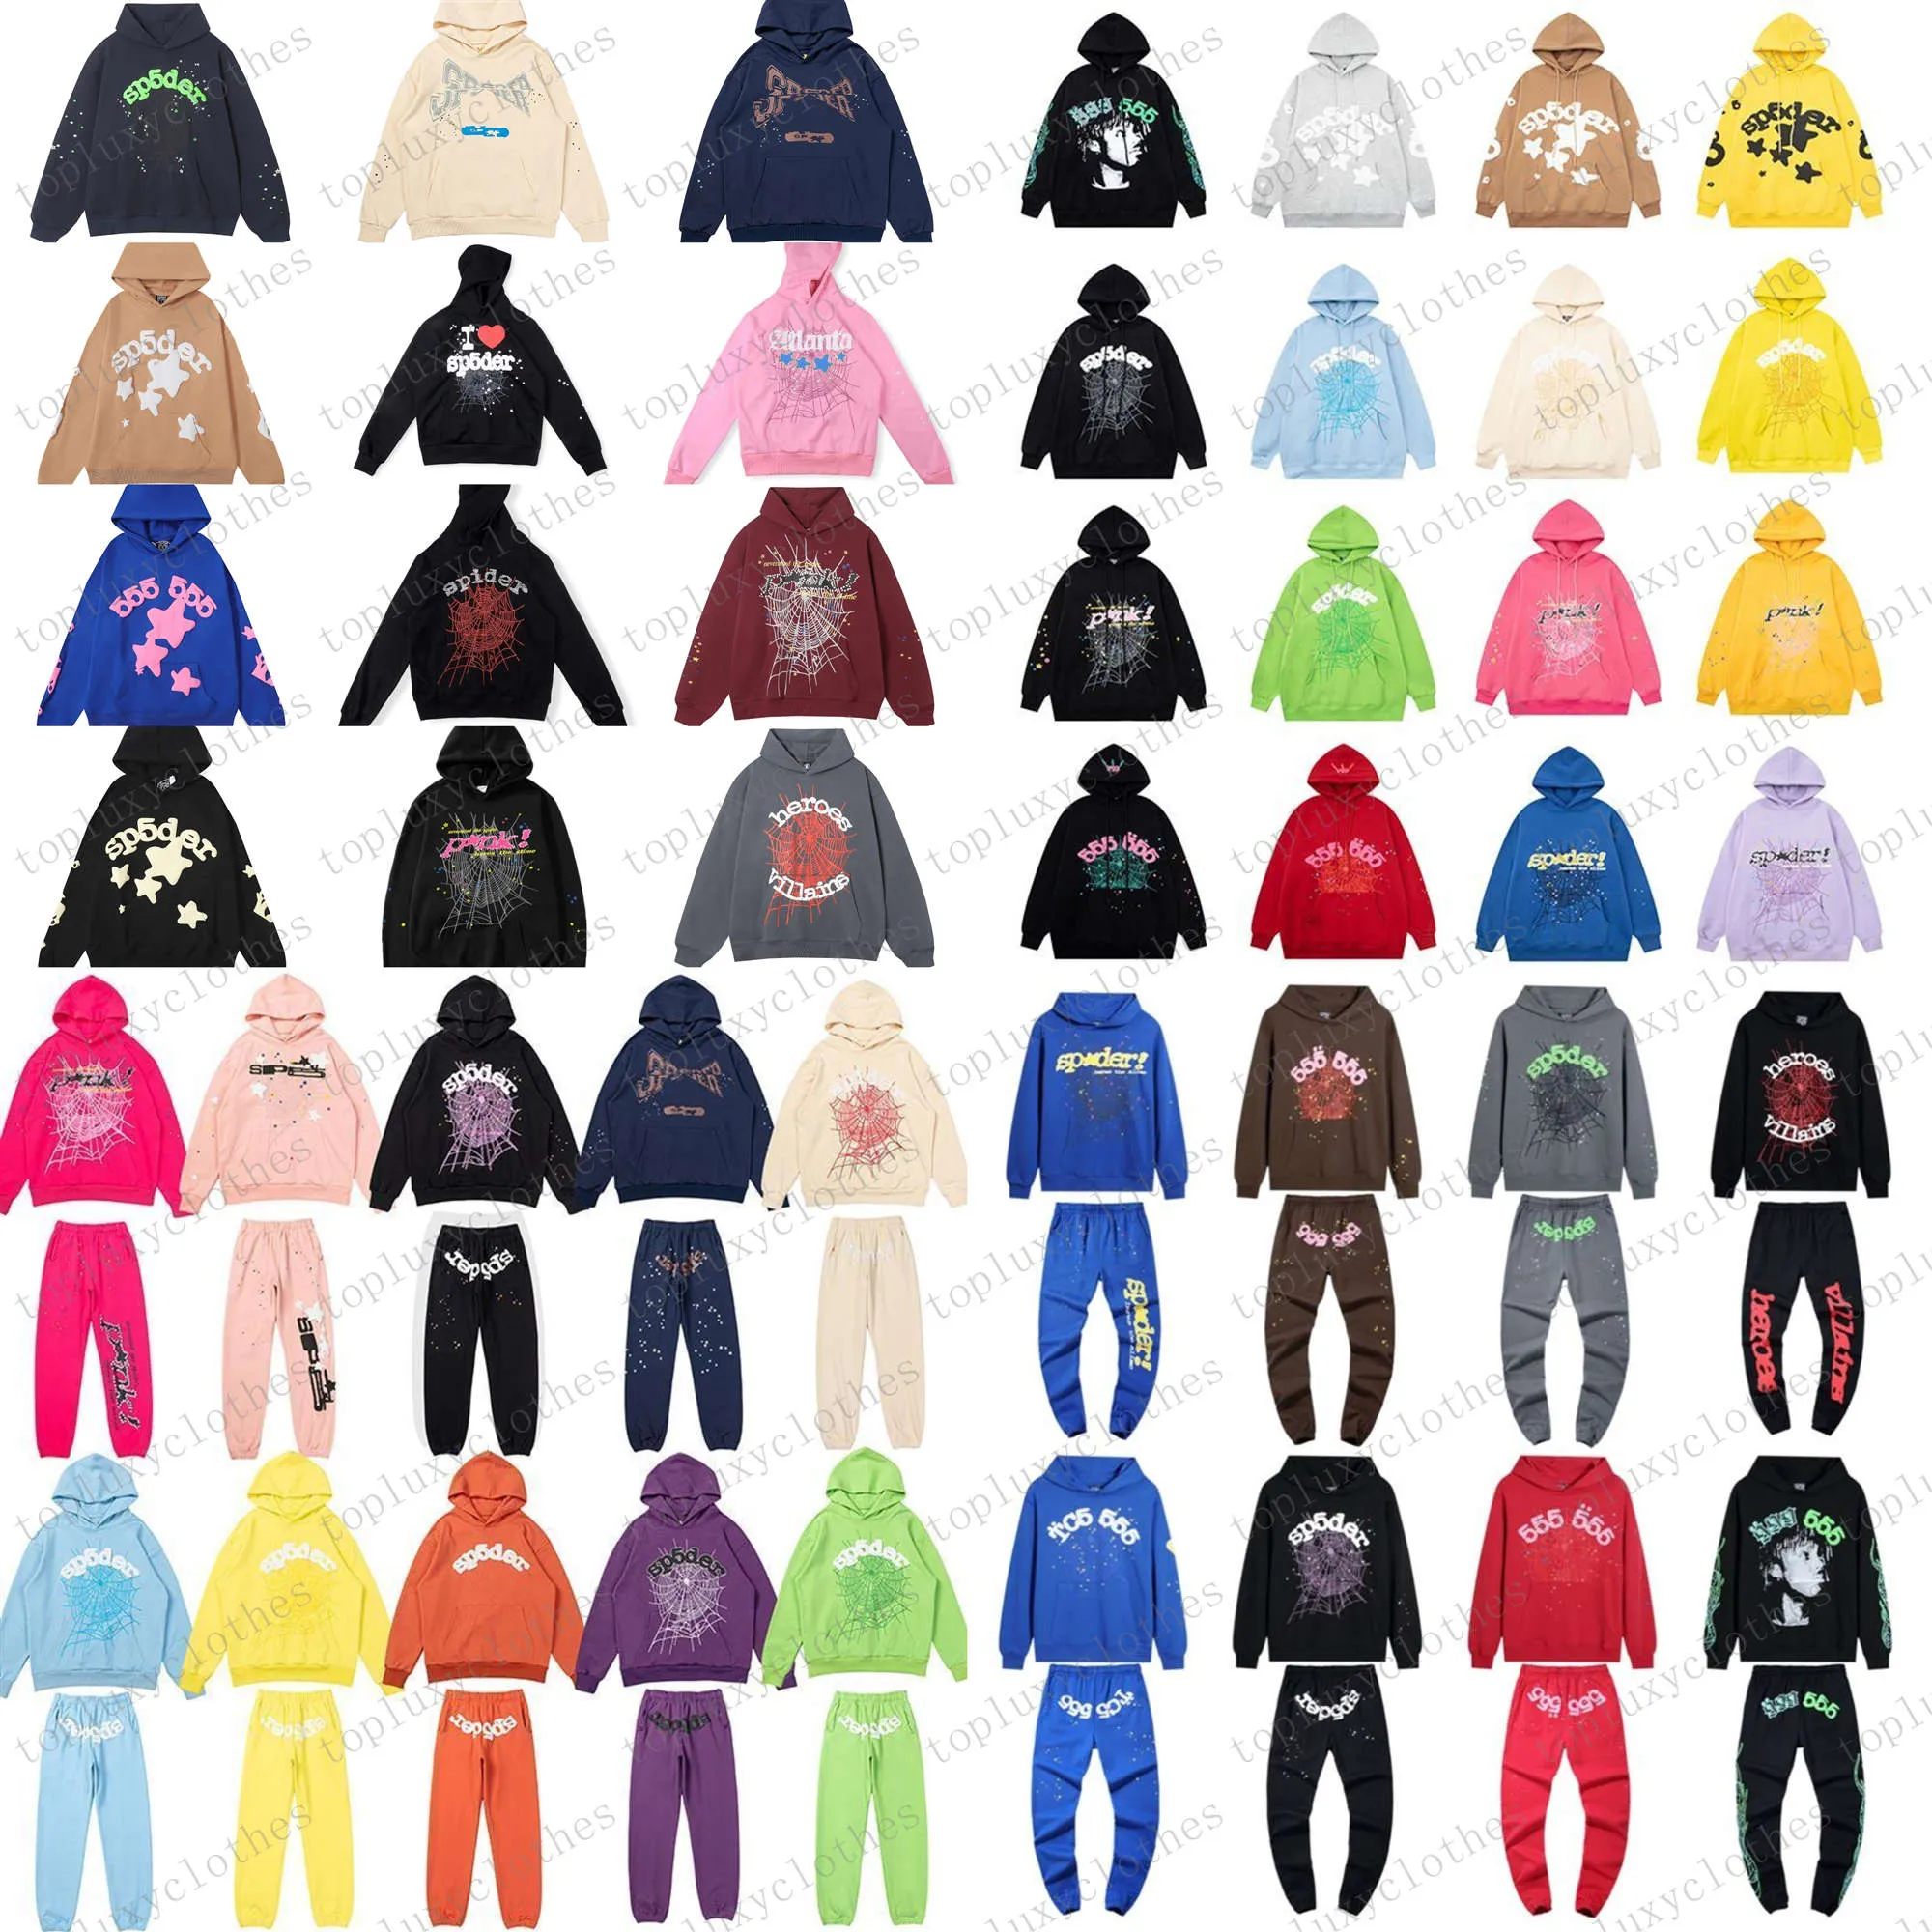 Sp5der Thug 555555 Men Women Hoodie High Quality Foam Web Graphic Pink Sweatshirts Hoodies Designer Pullovers S-2xl